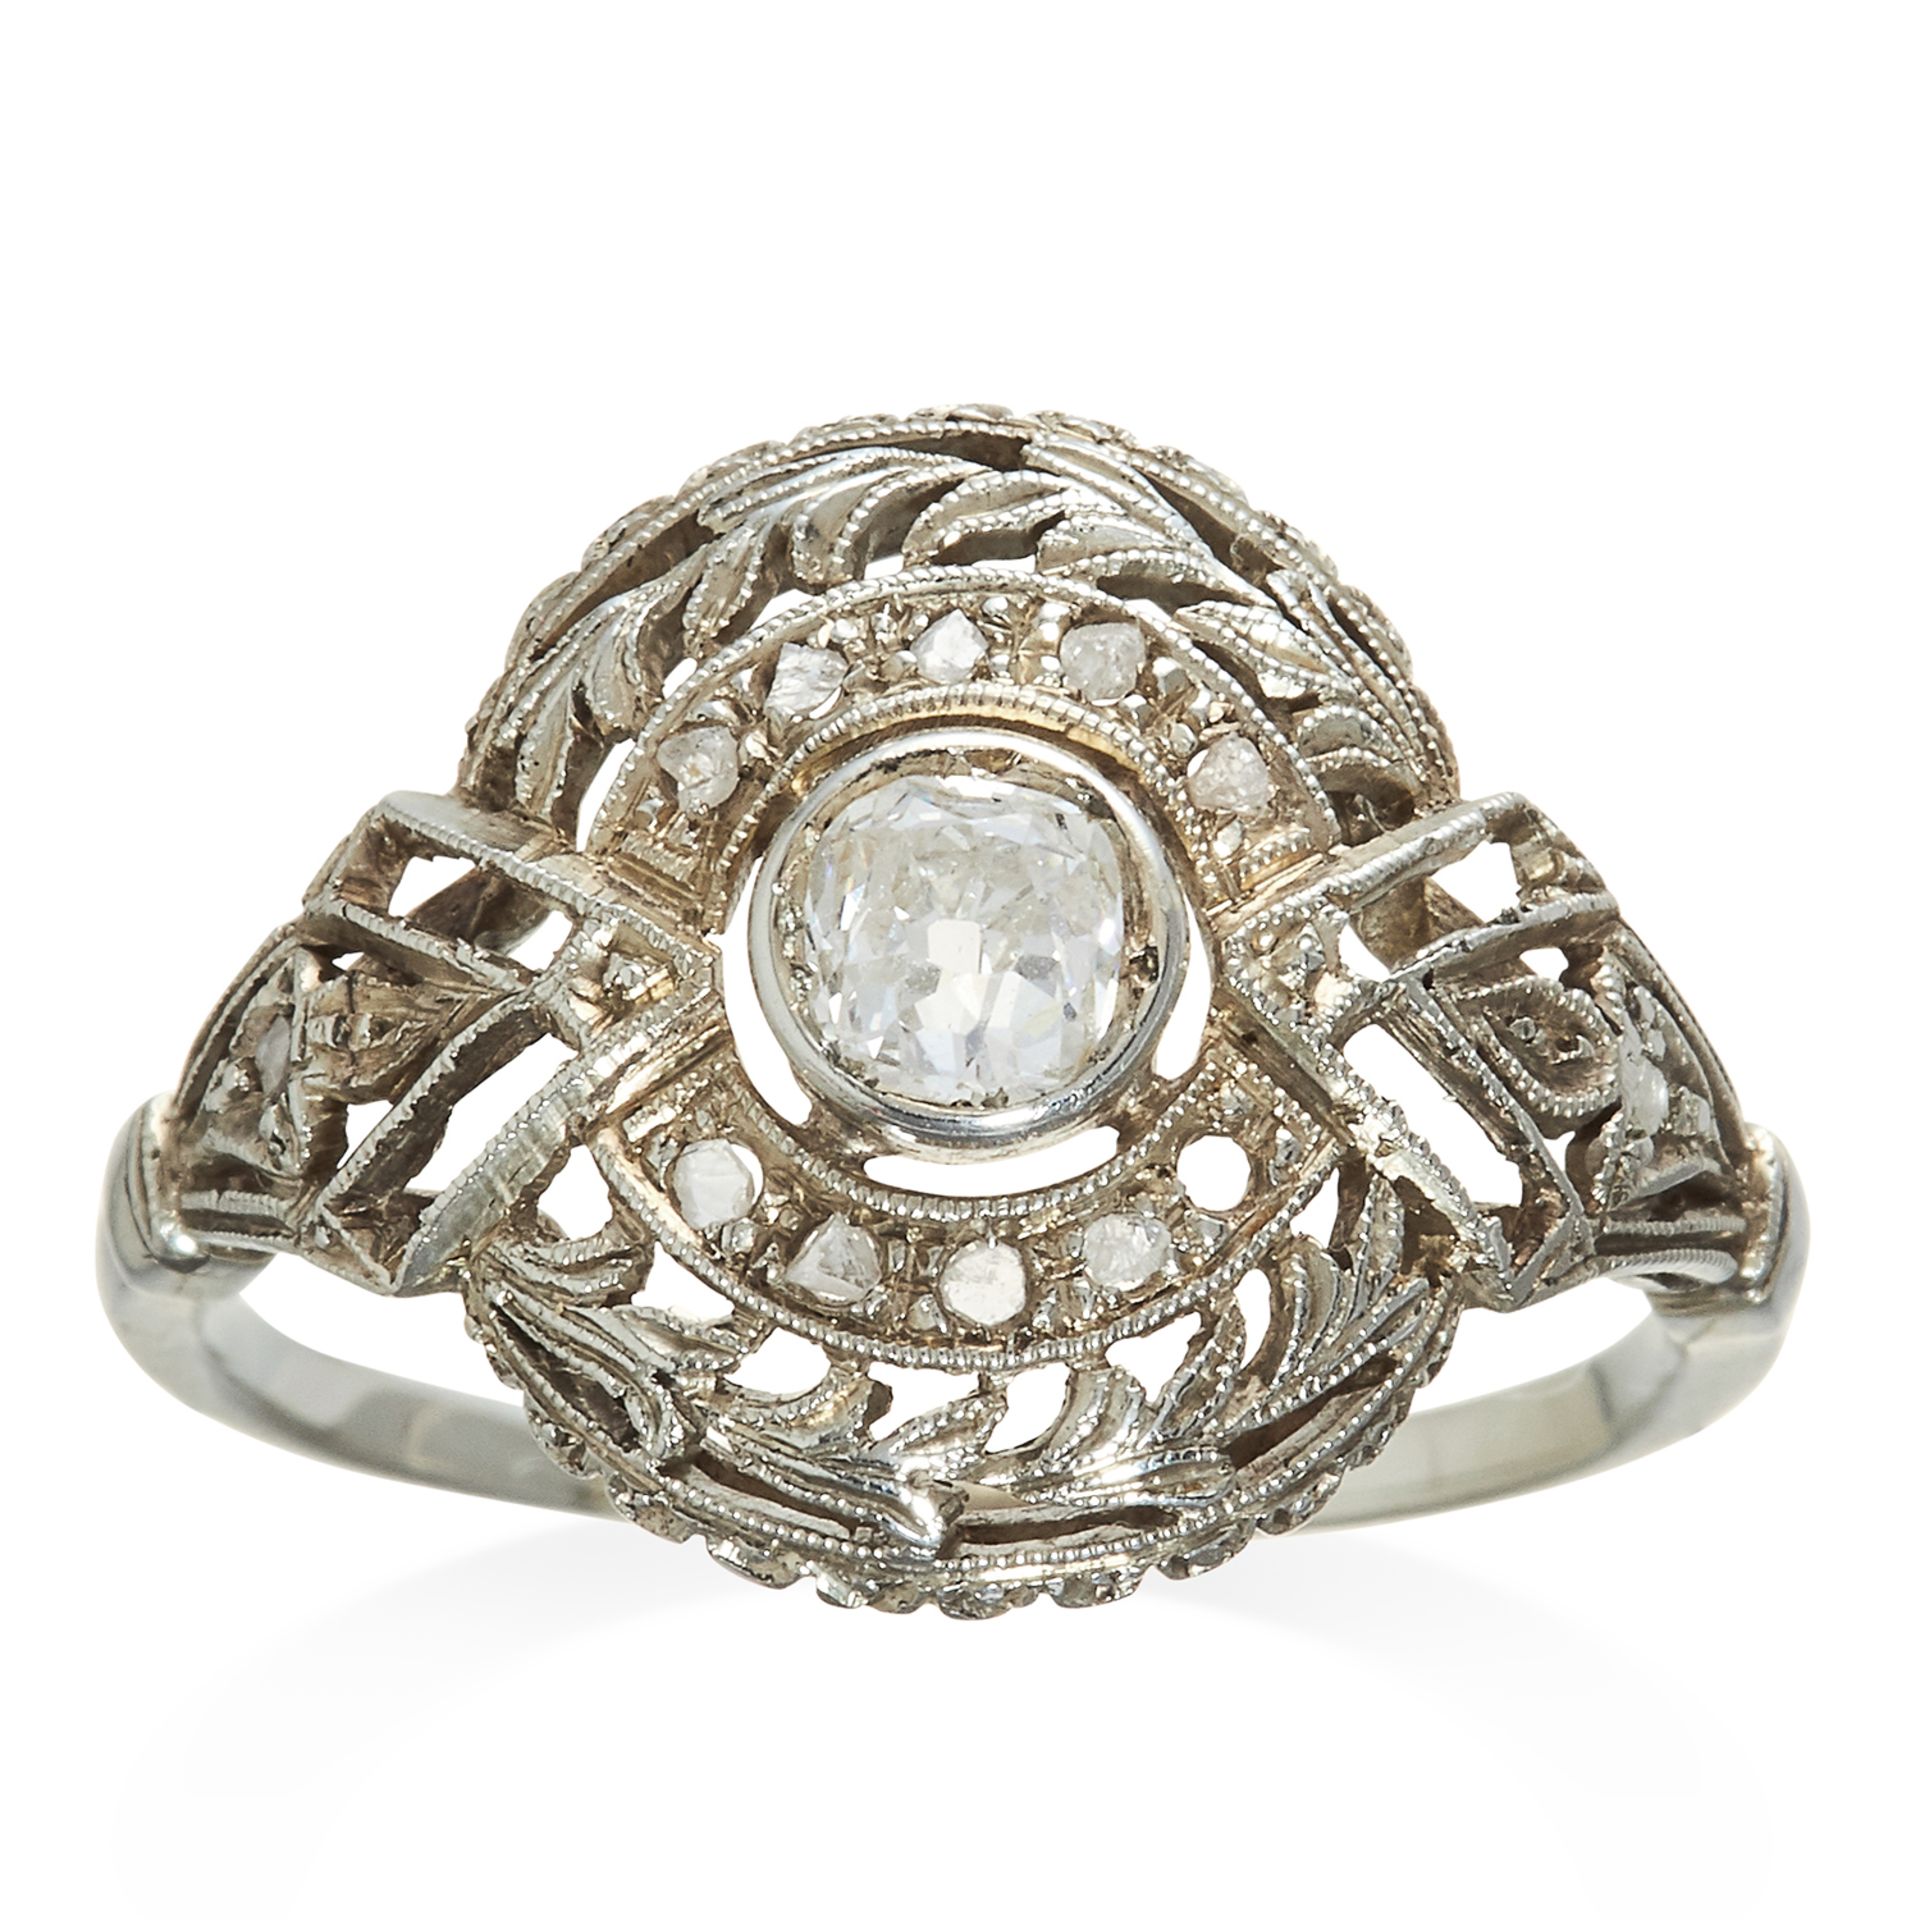 AN ART DECO DIAMOND RING in platinum or white gold, the 0.35 carat old cut diamond within diamond